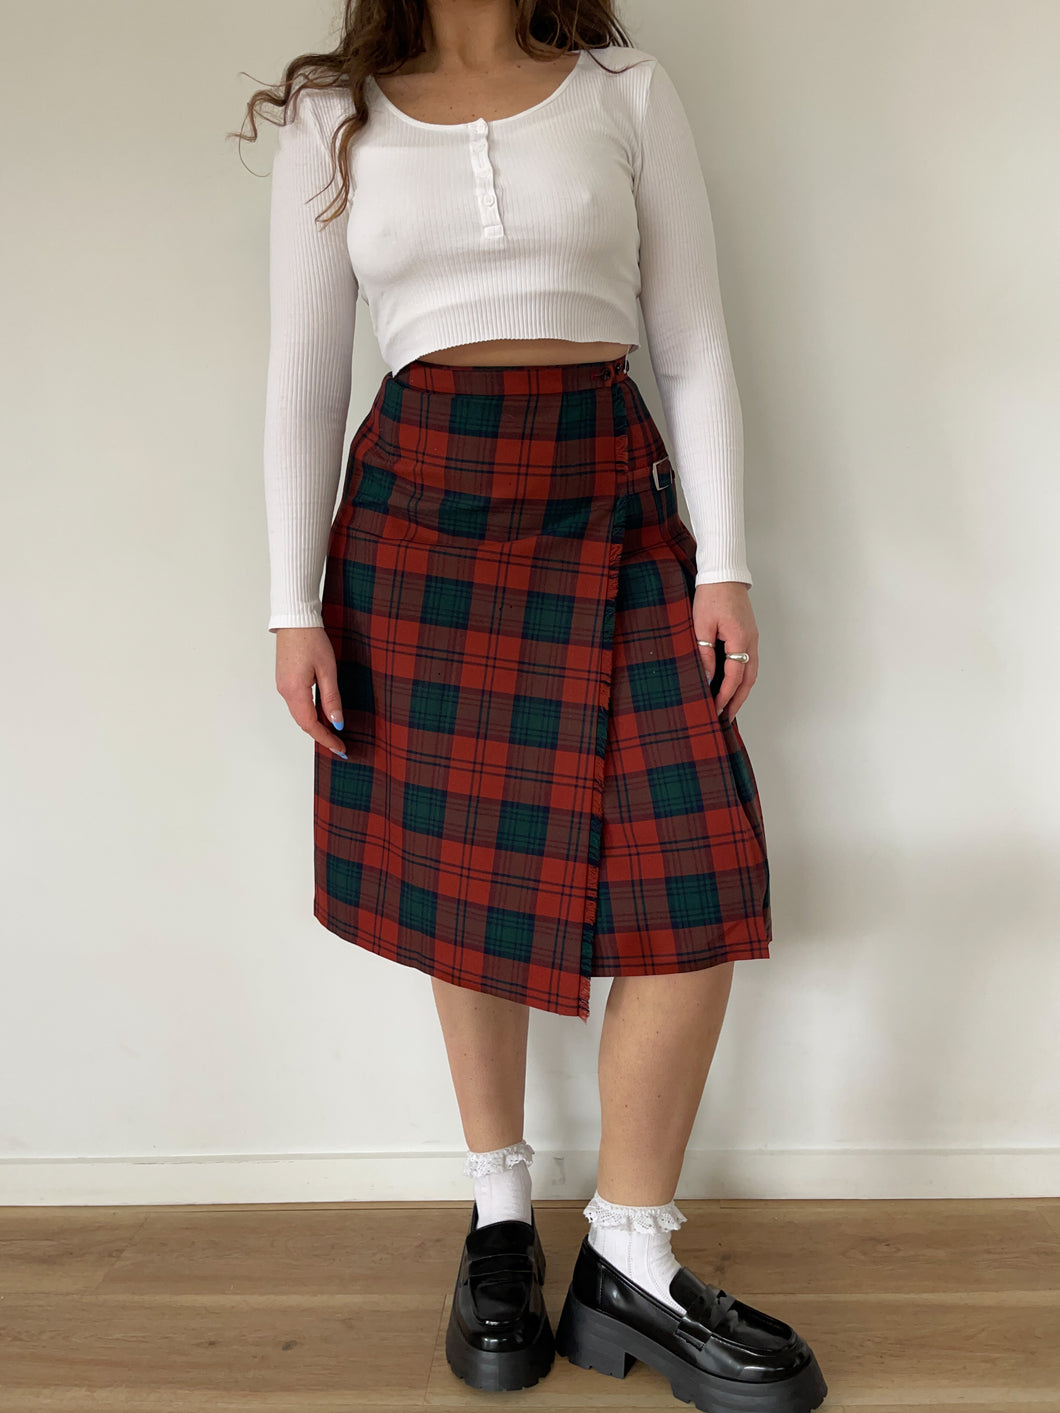 Vintage Fletcher Jones Tartan Skirt (6-8)